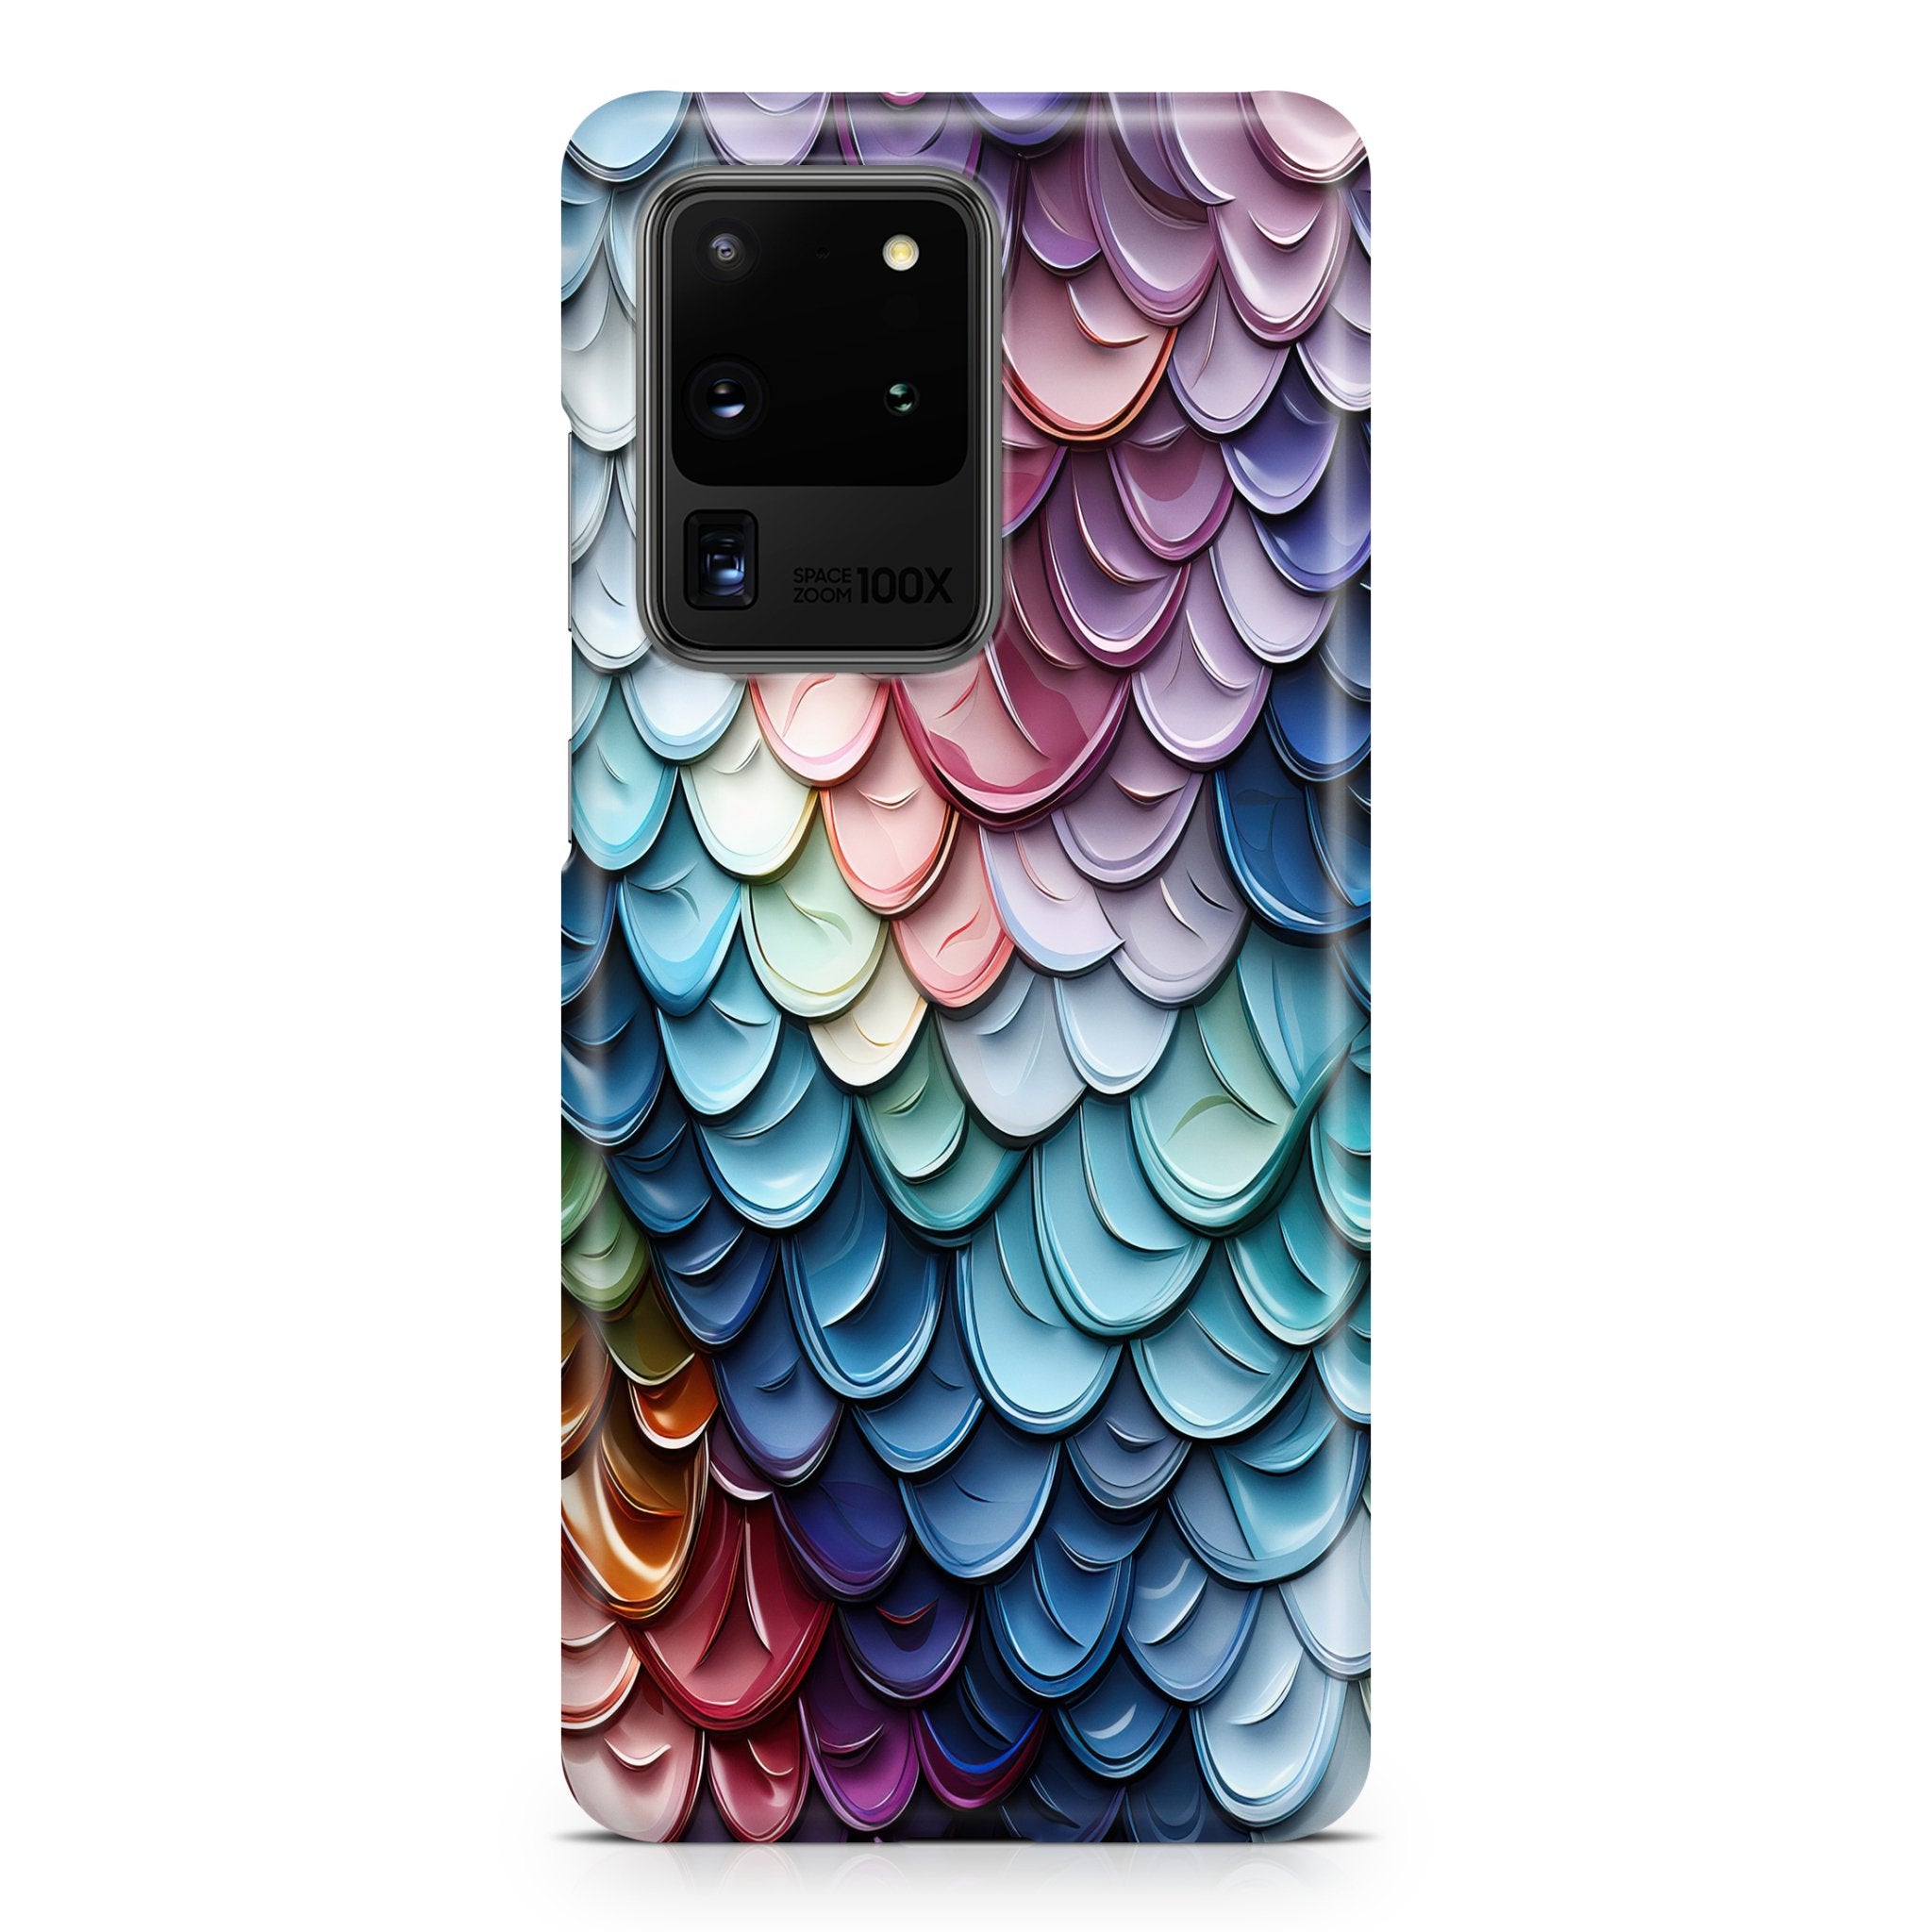 Chromatic Splendor - Samsung phone case designs by CaseSwagger